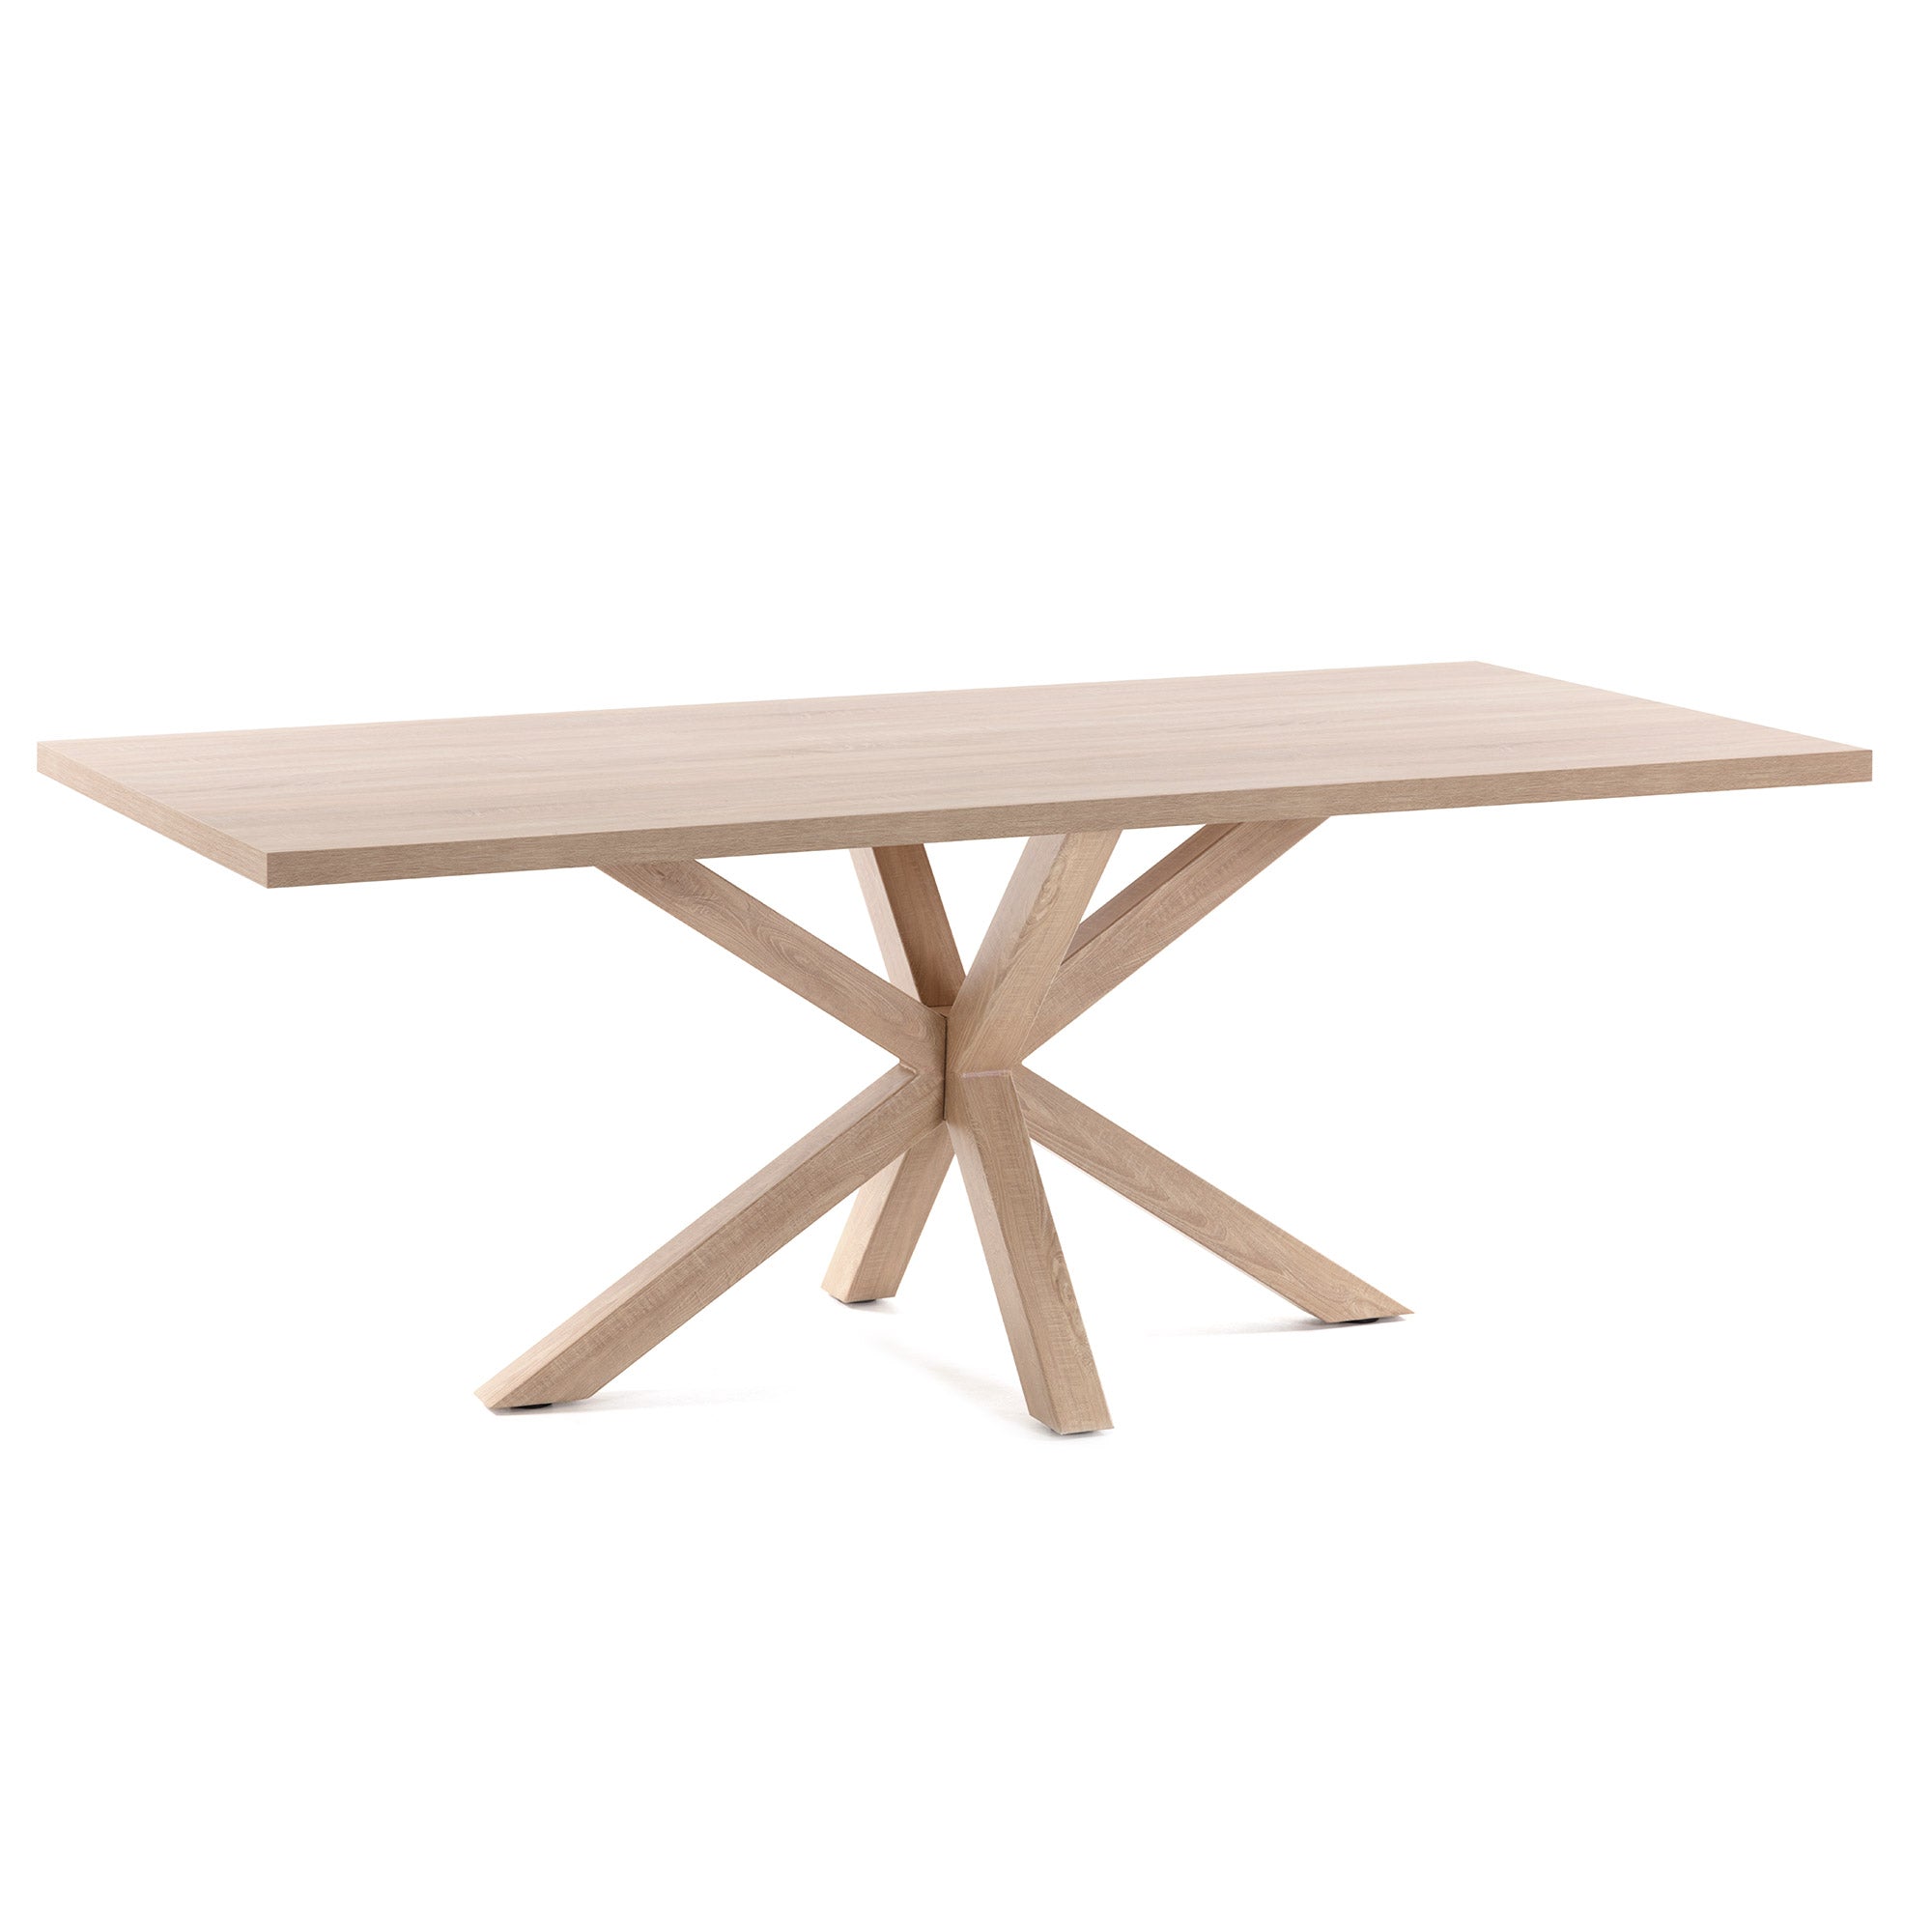 Argo table 160 cm natural melamine wood effect legs